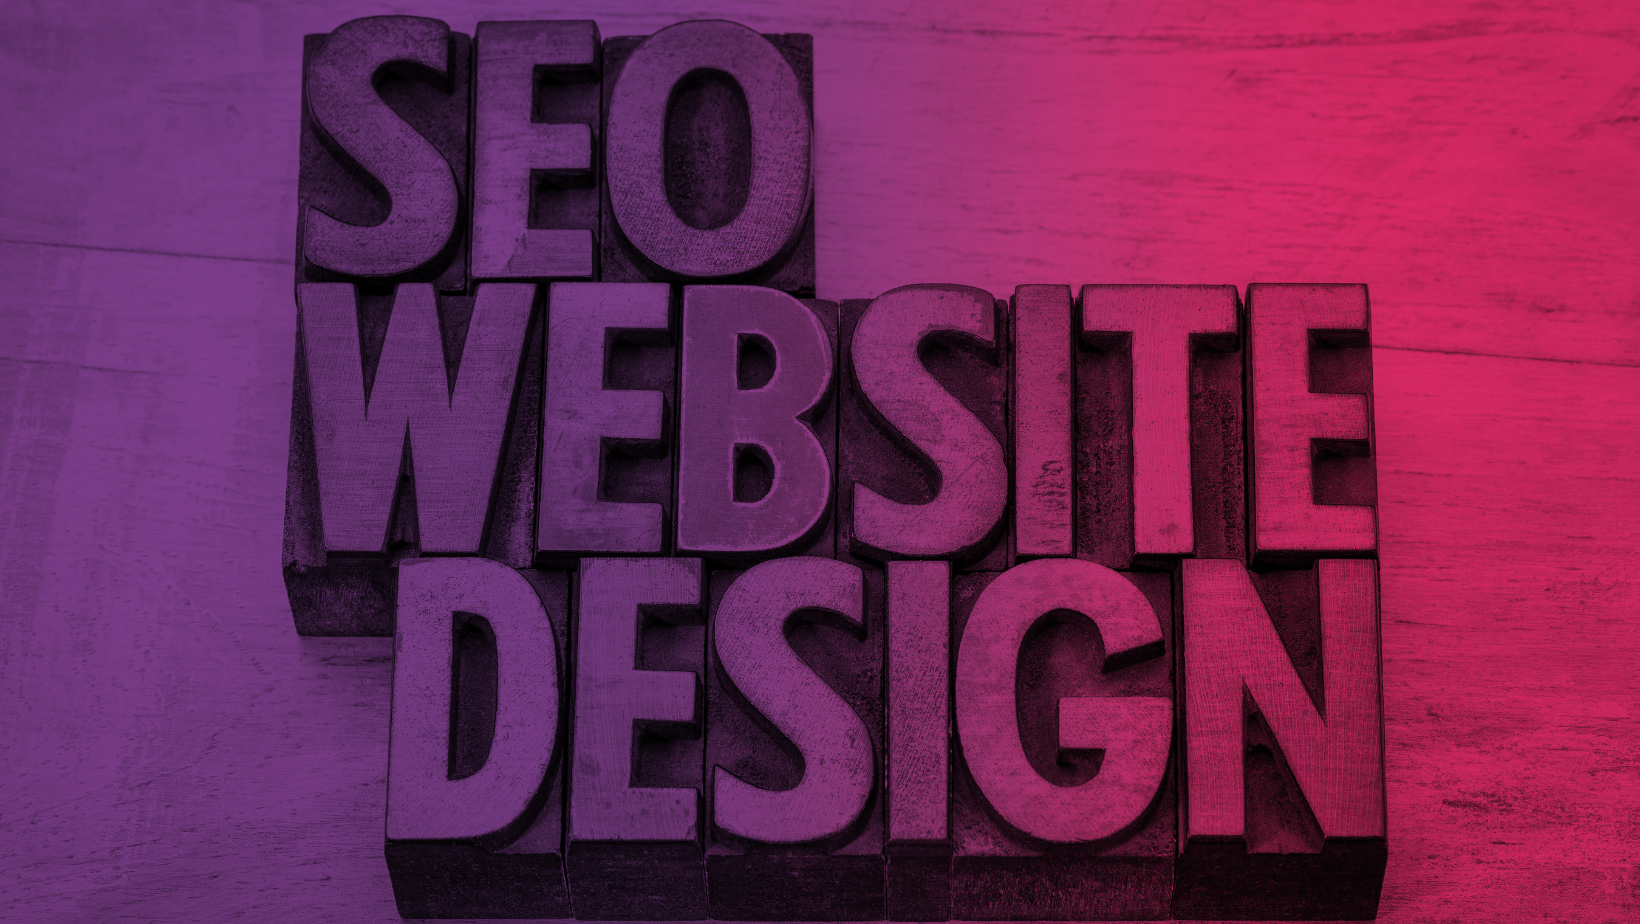 Blocks that spell out: SEO Website Design